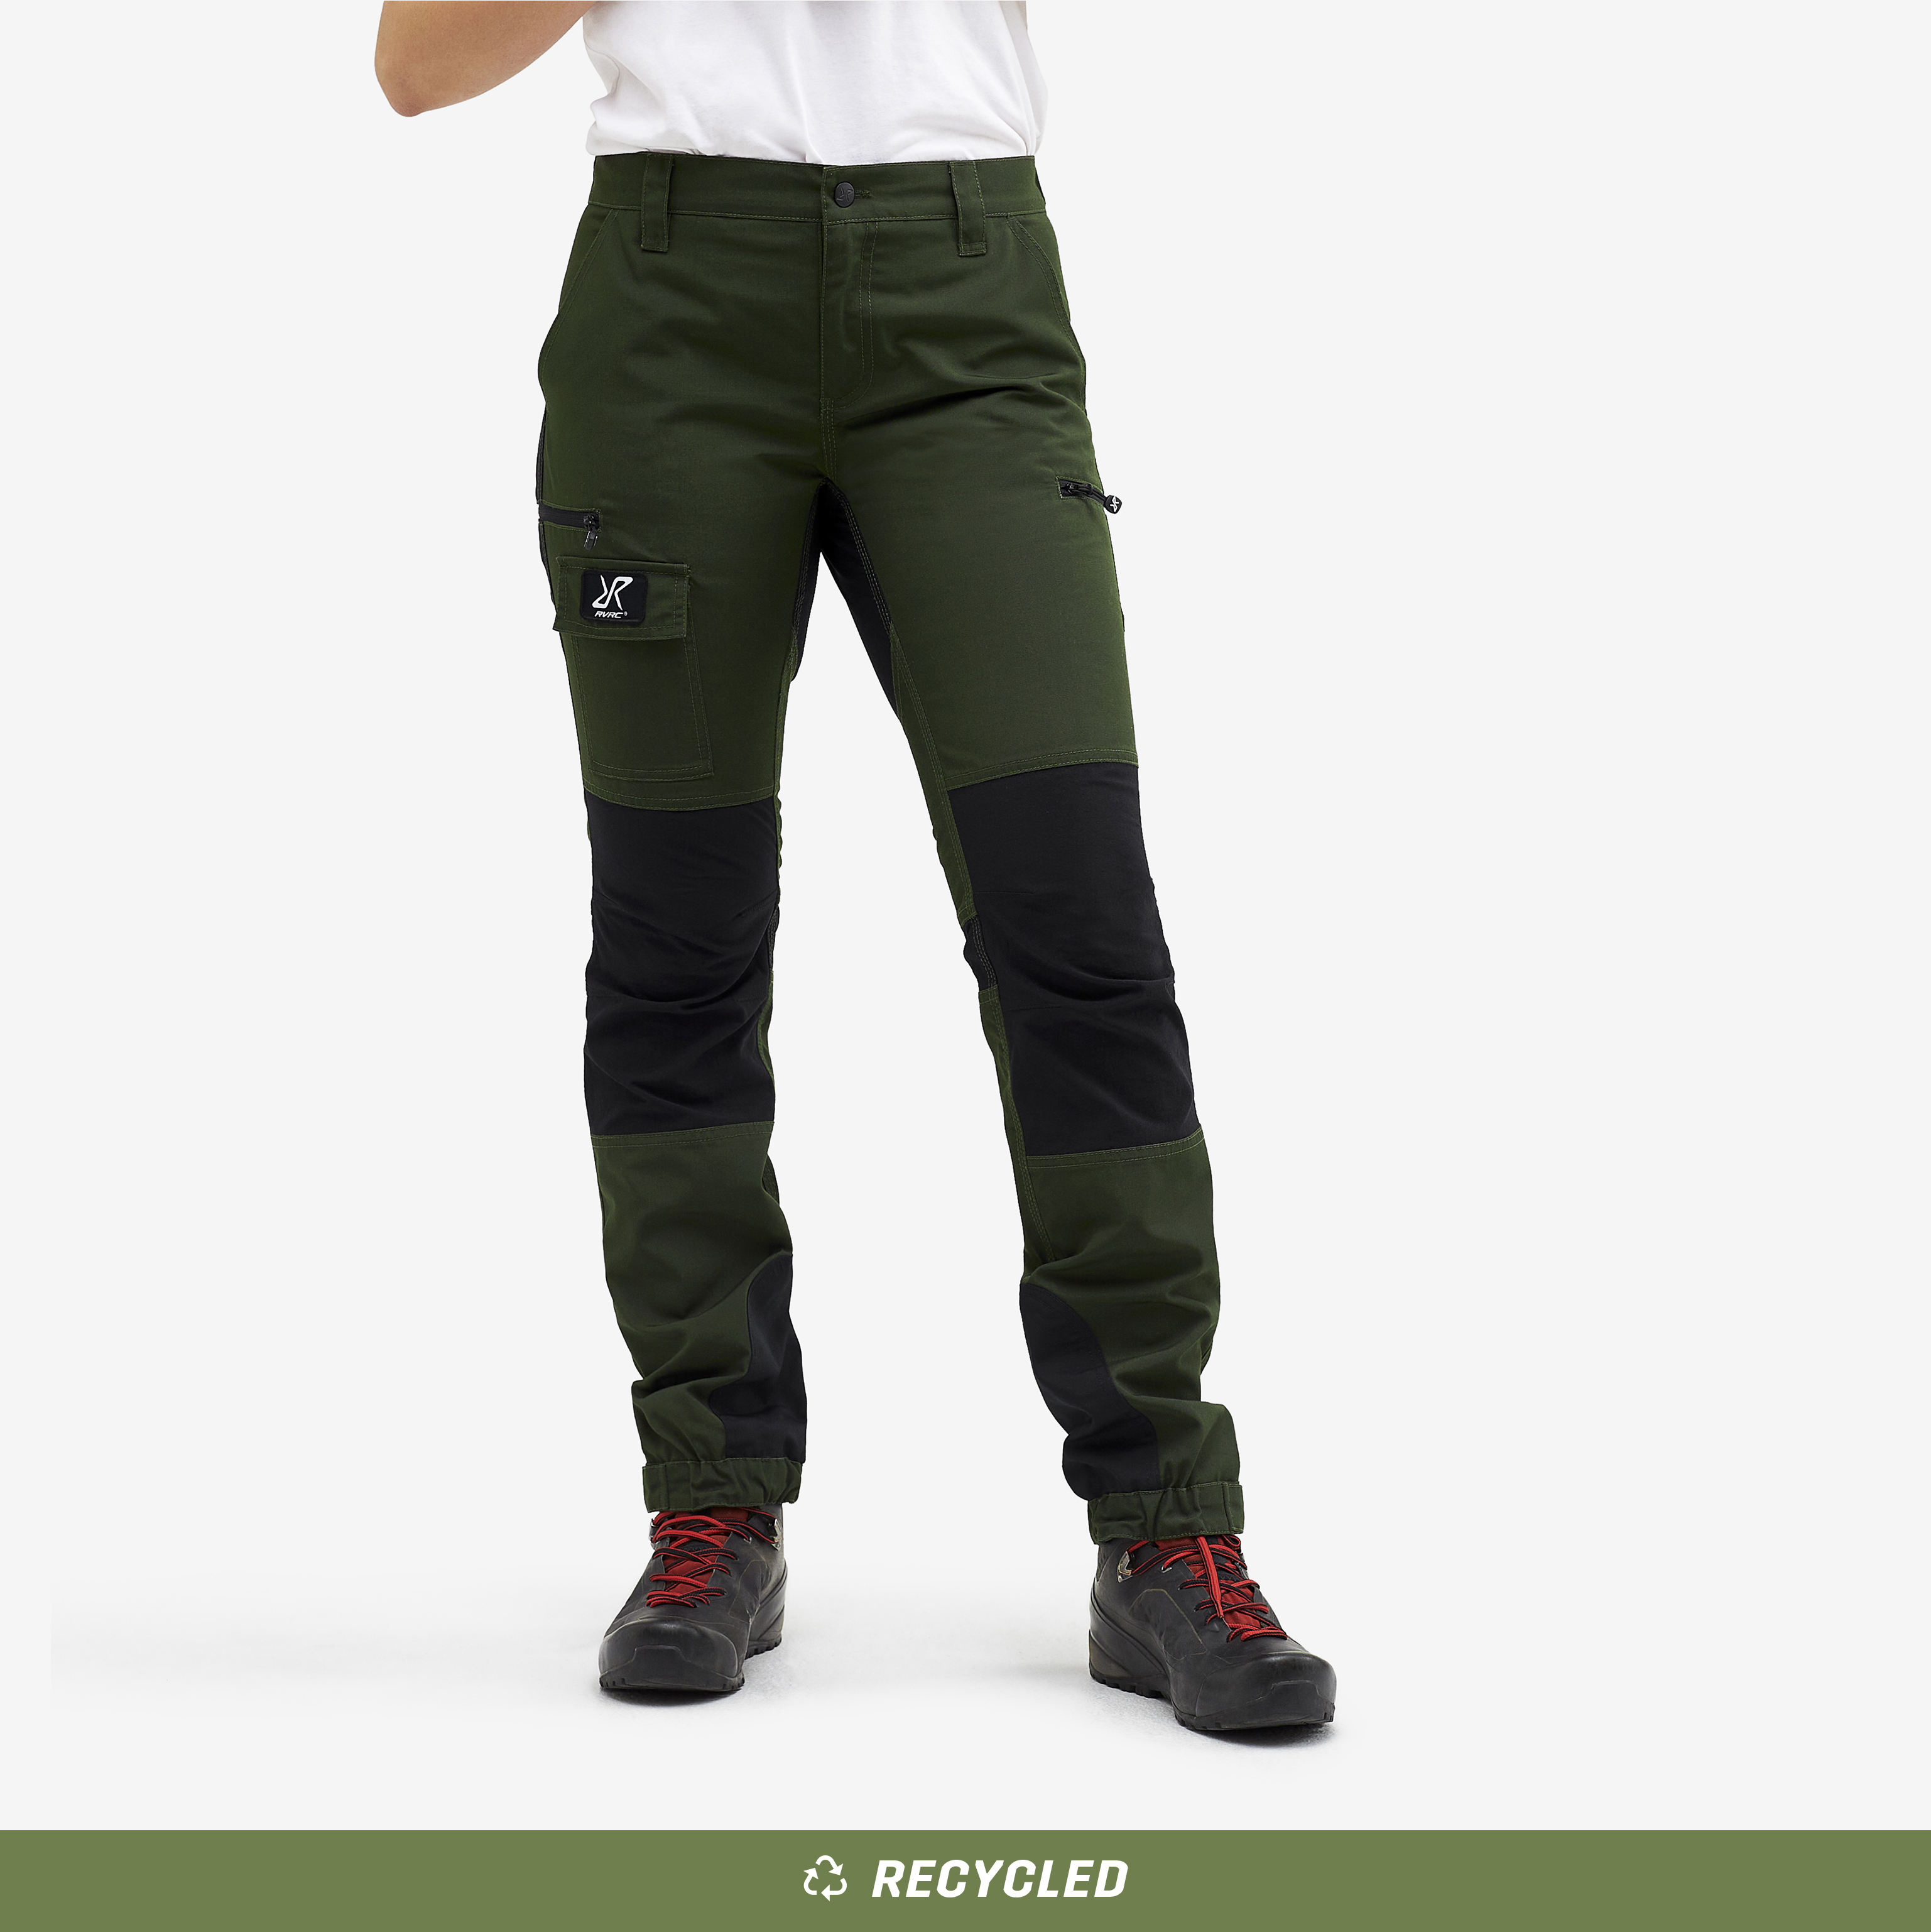 Nordwand walking trousers for women in green